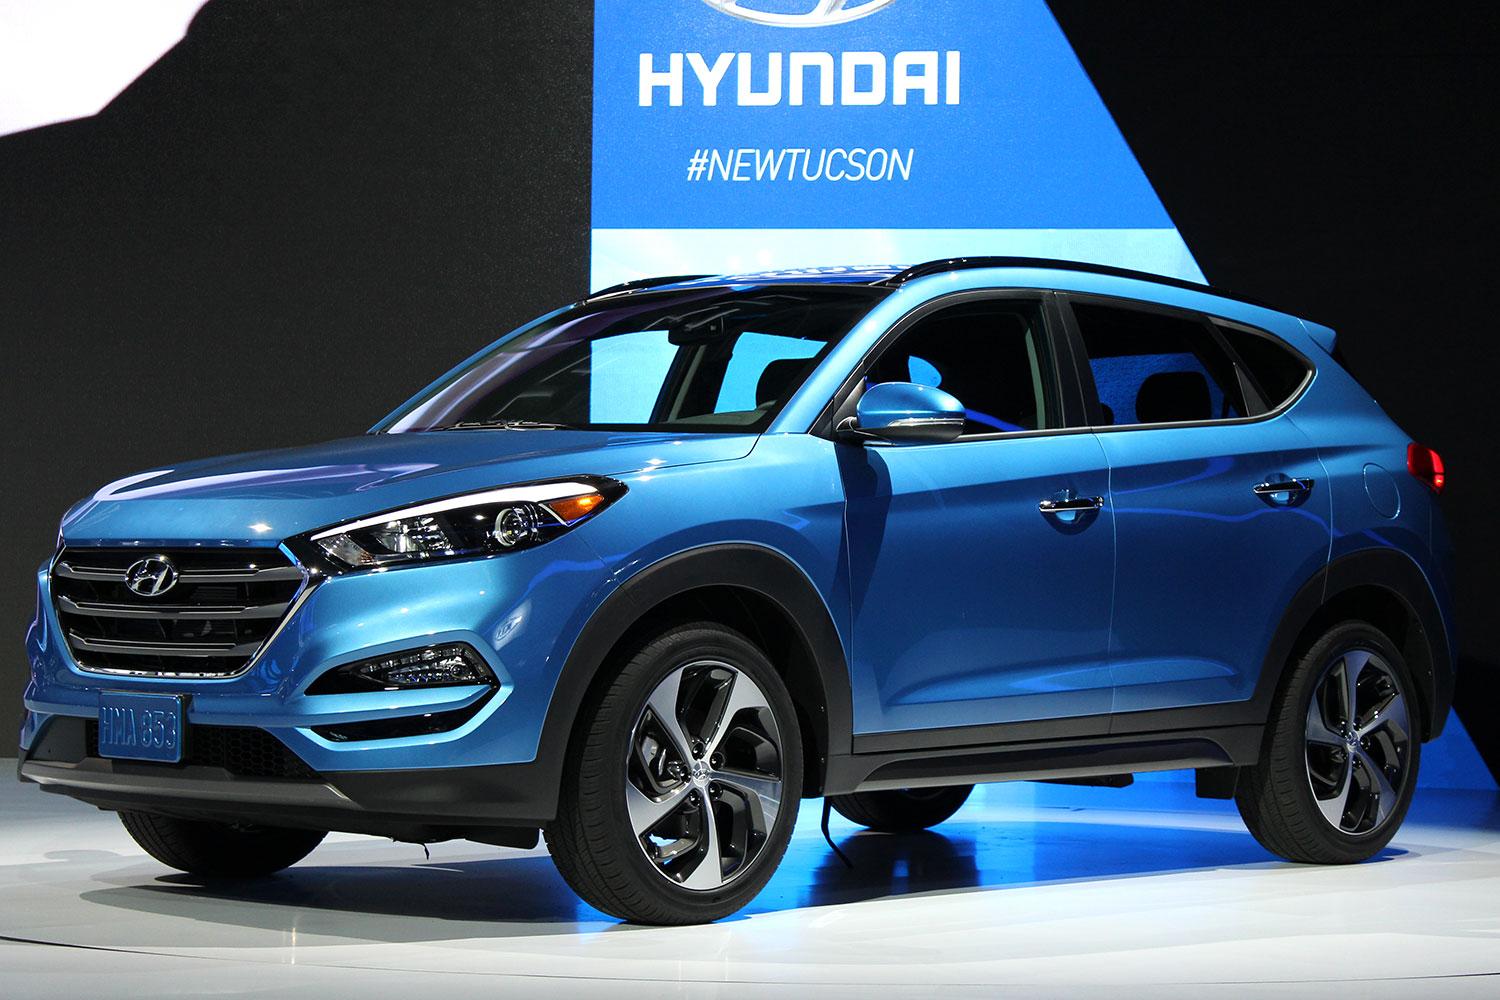 2016 Hyundai Tuscon front side angle